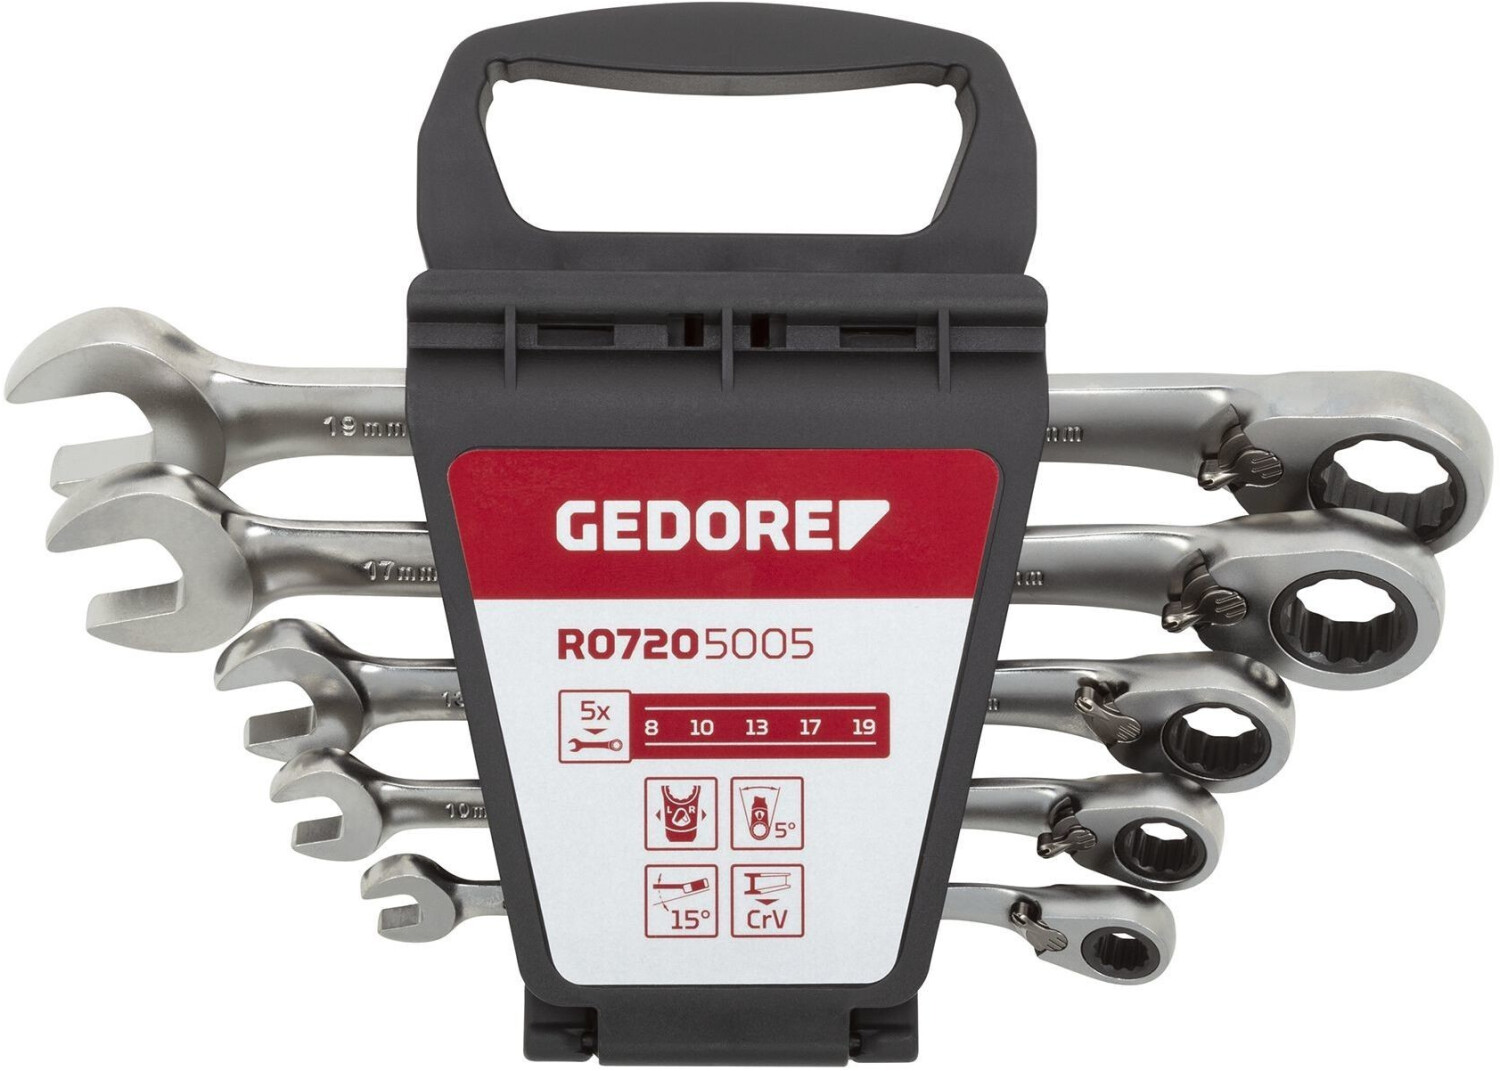 GEDORE red R20650066 - Caja de herramientas vacía 445x180x380 mm ABS  (3301660)